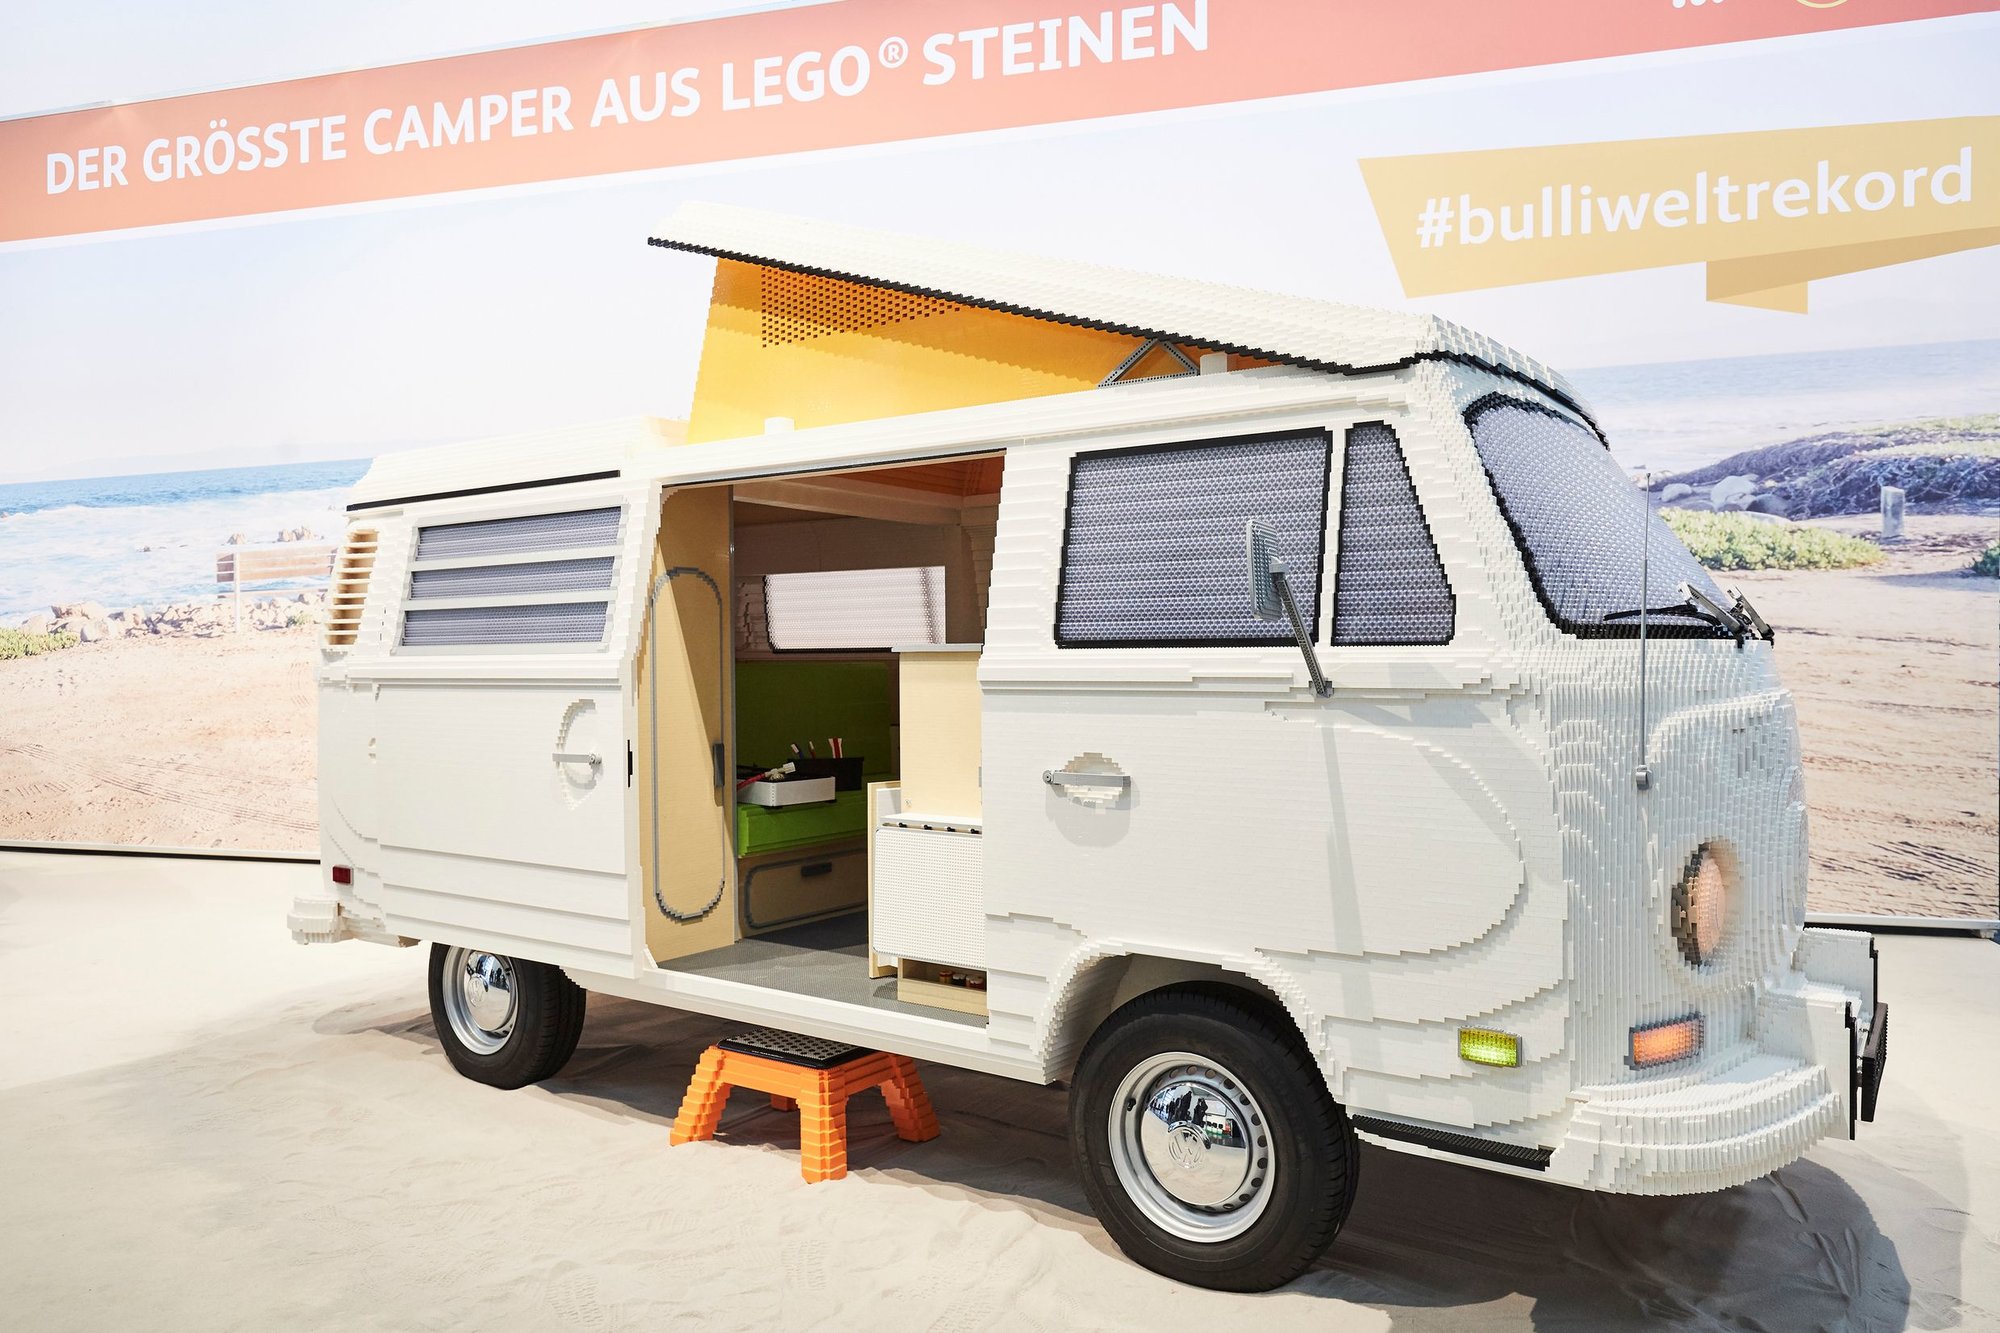 Obytný Volkswagen Transporter T2 sestavený ze 400 000 kostek LEGO